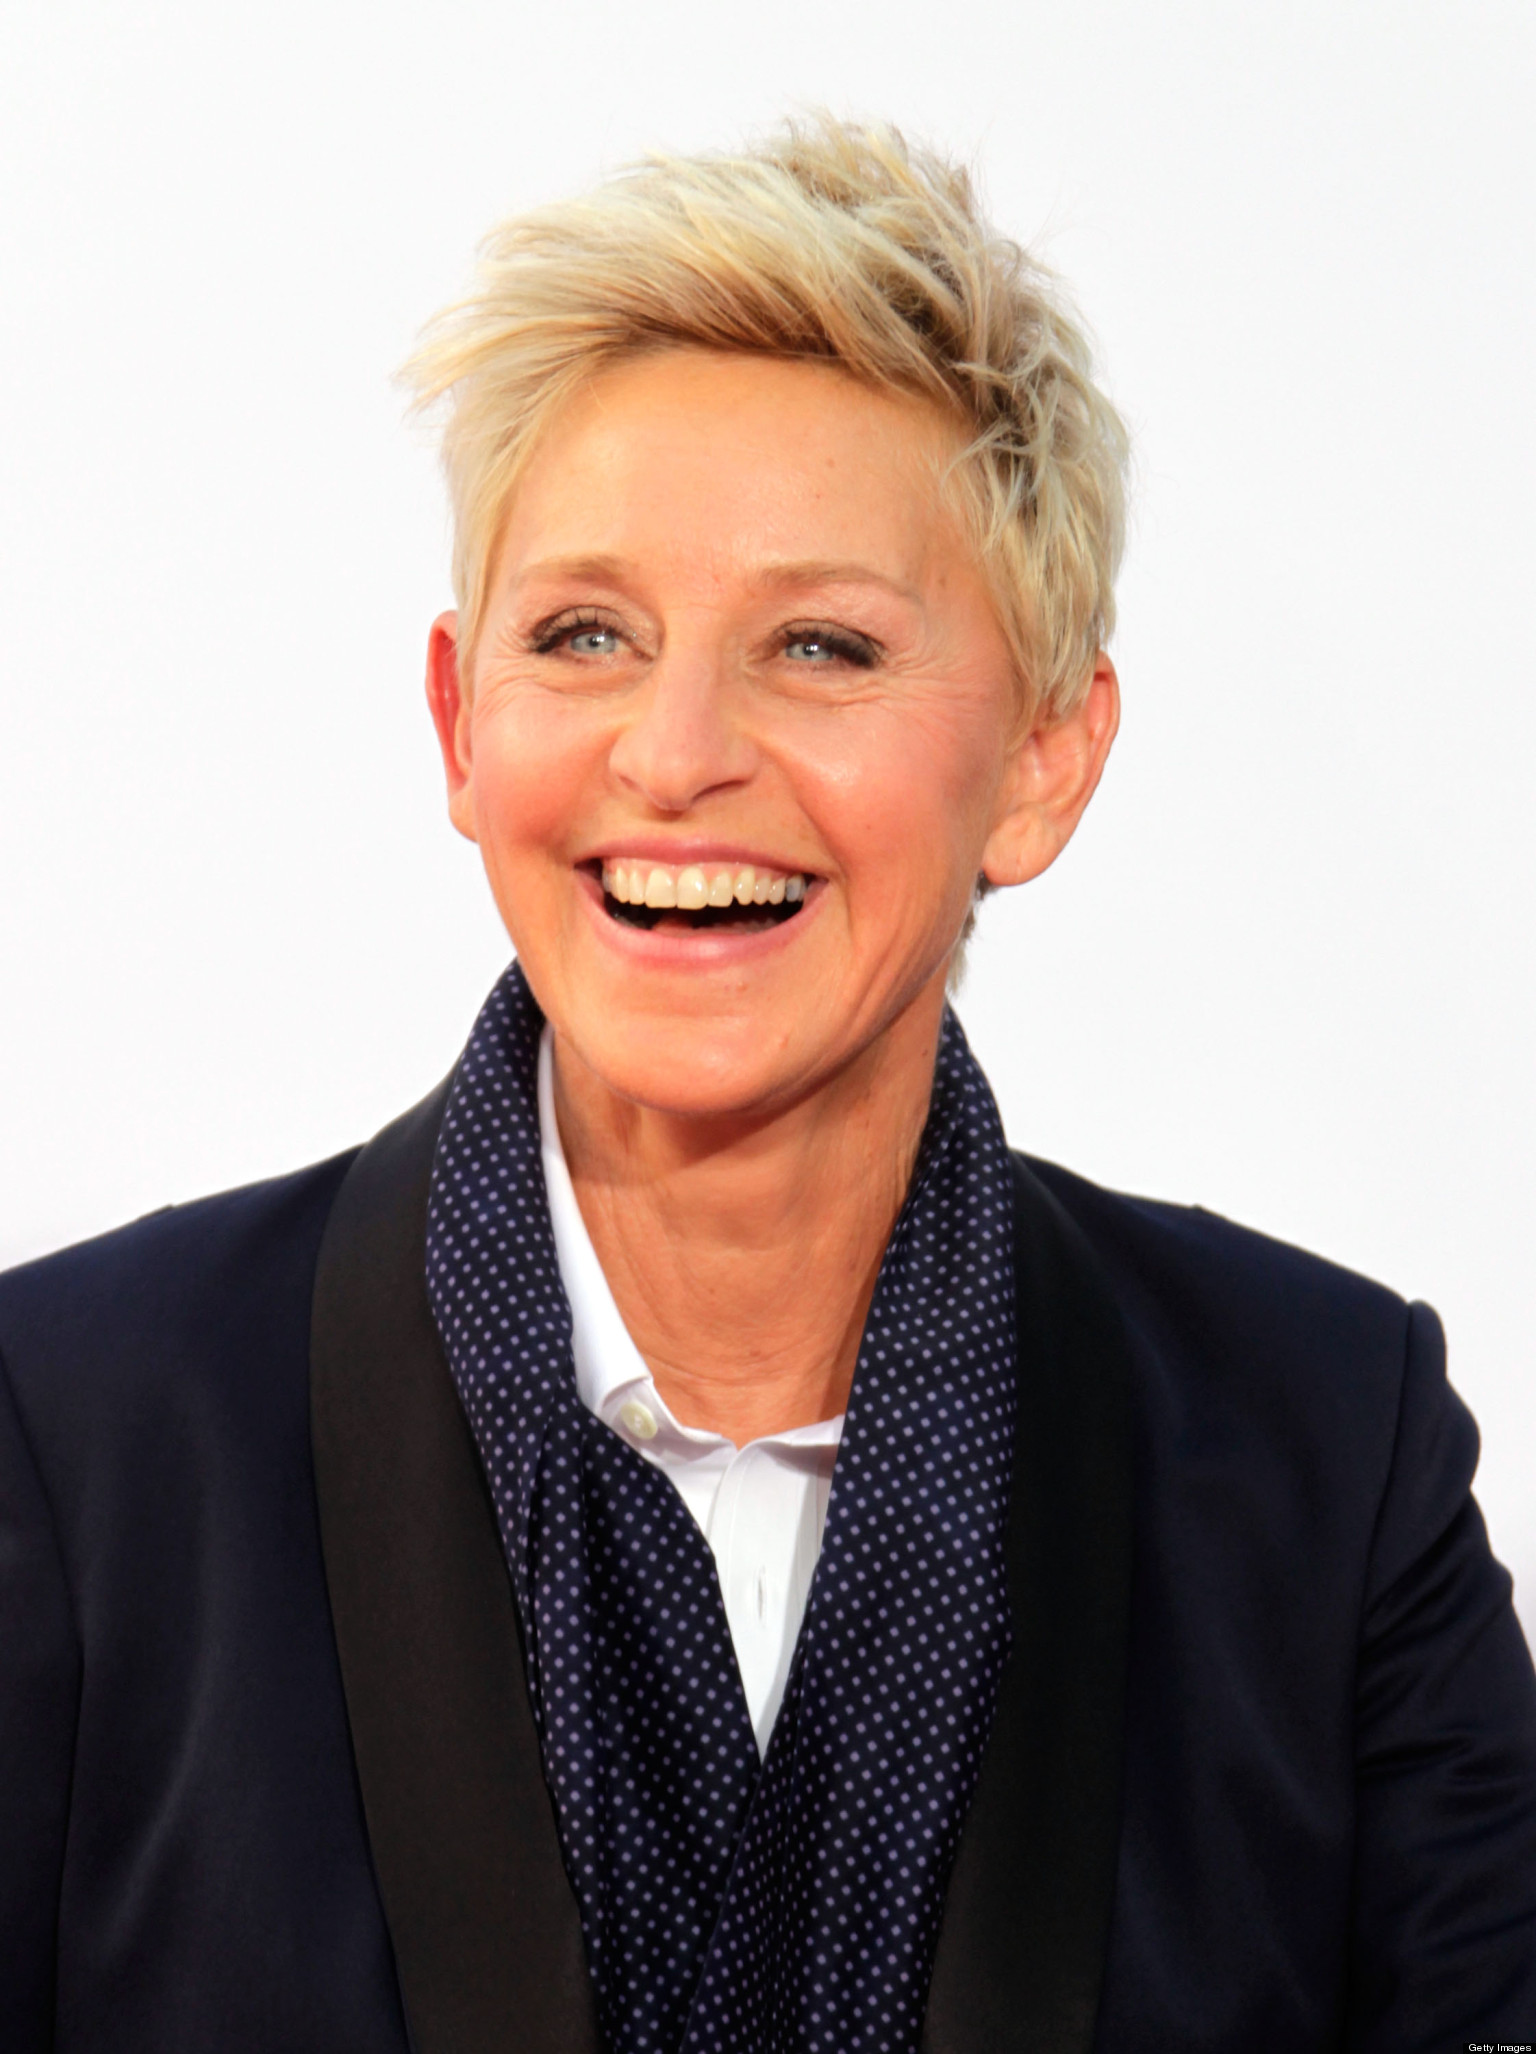 Ellen DeGeneres On TIME Magazine: Comedian Came Out 16 ...